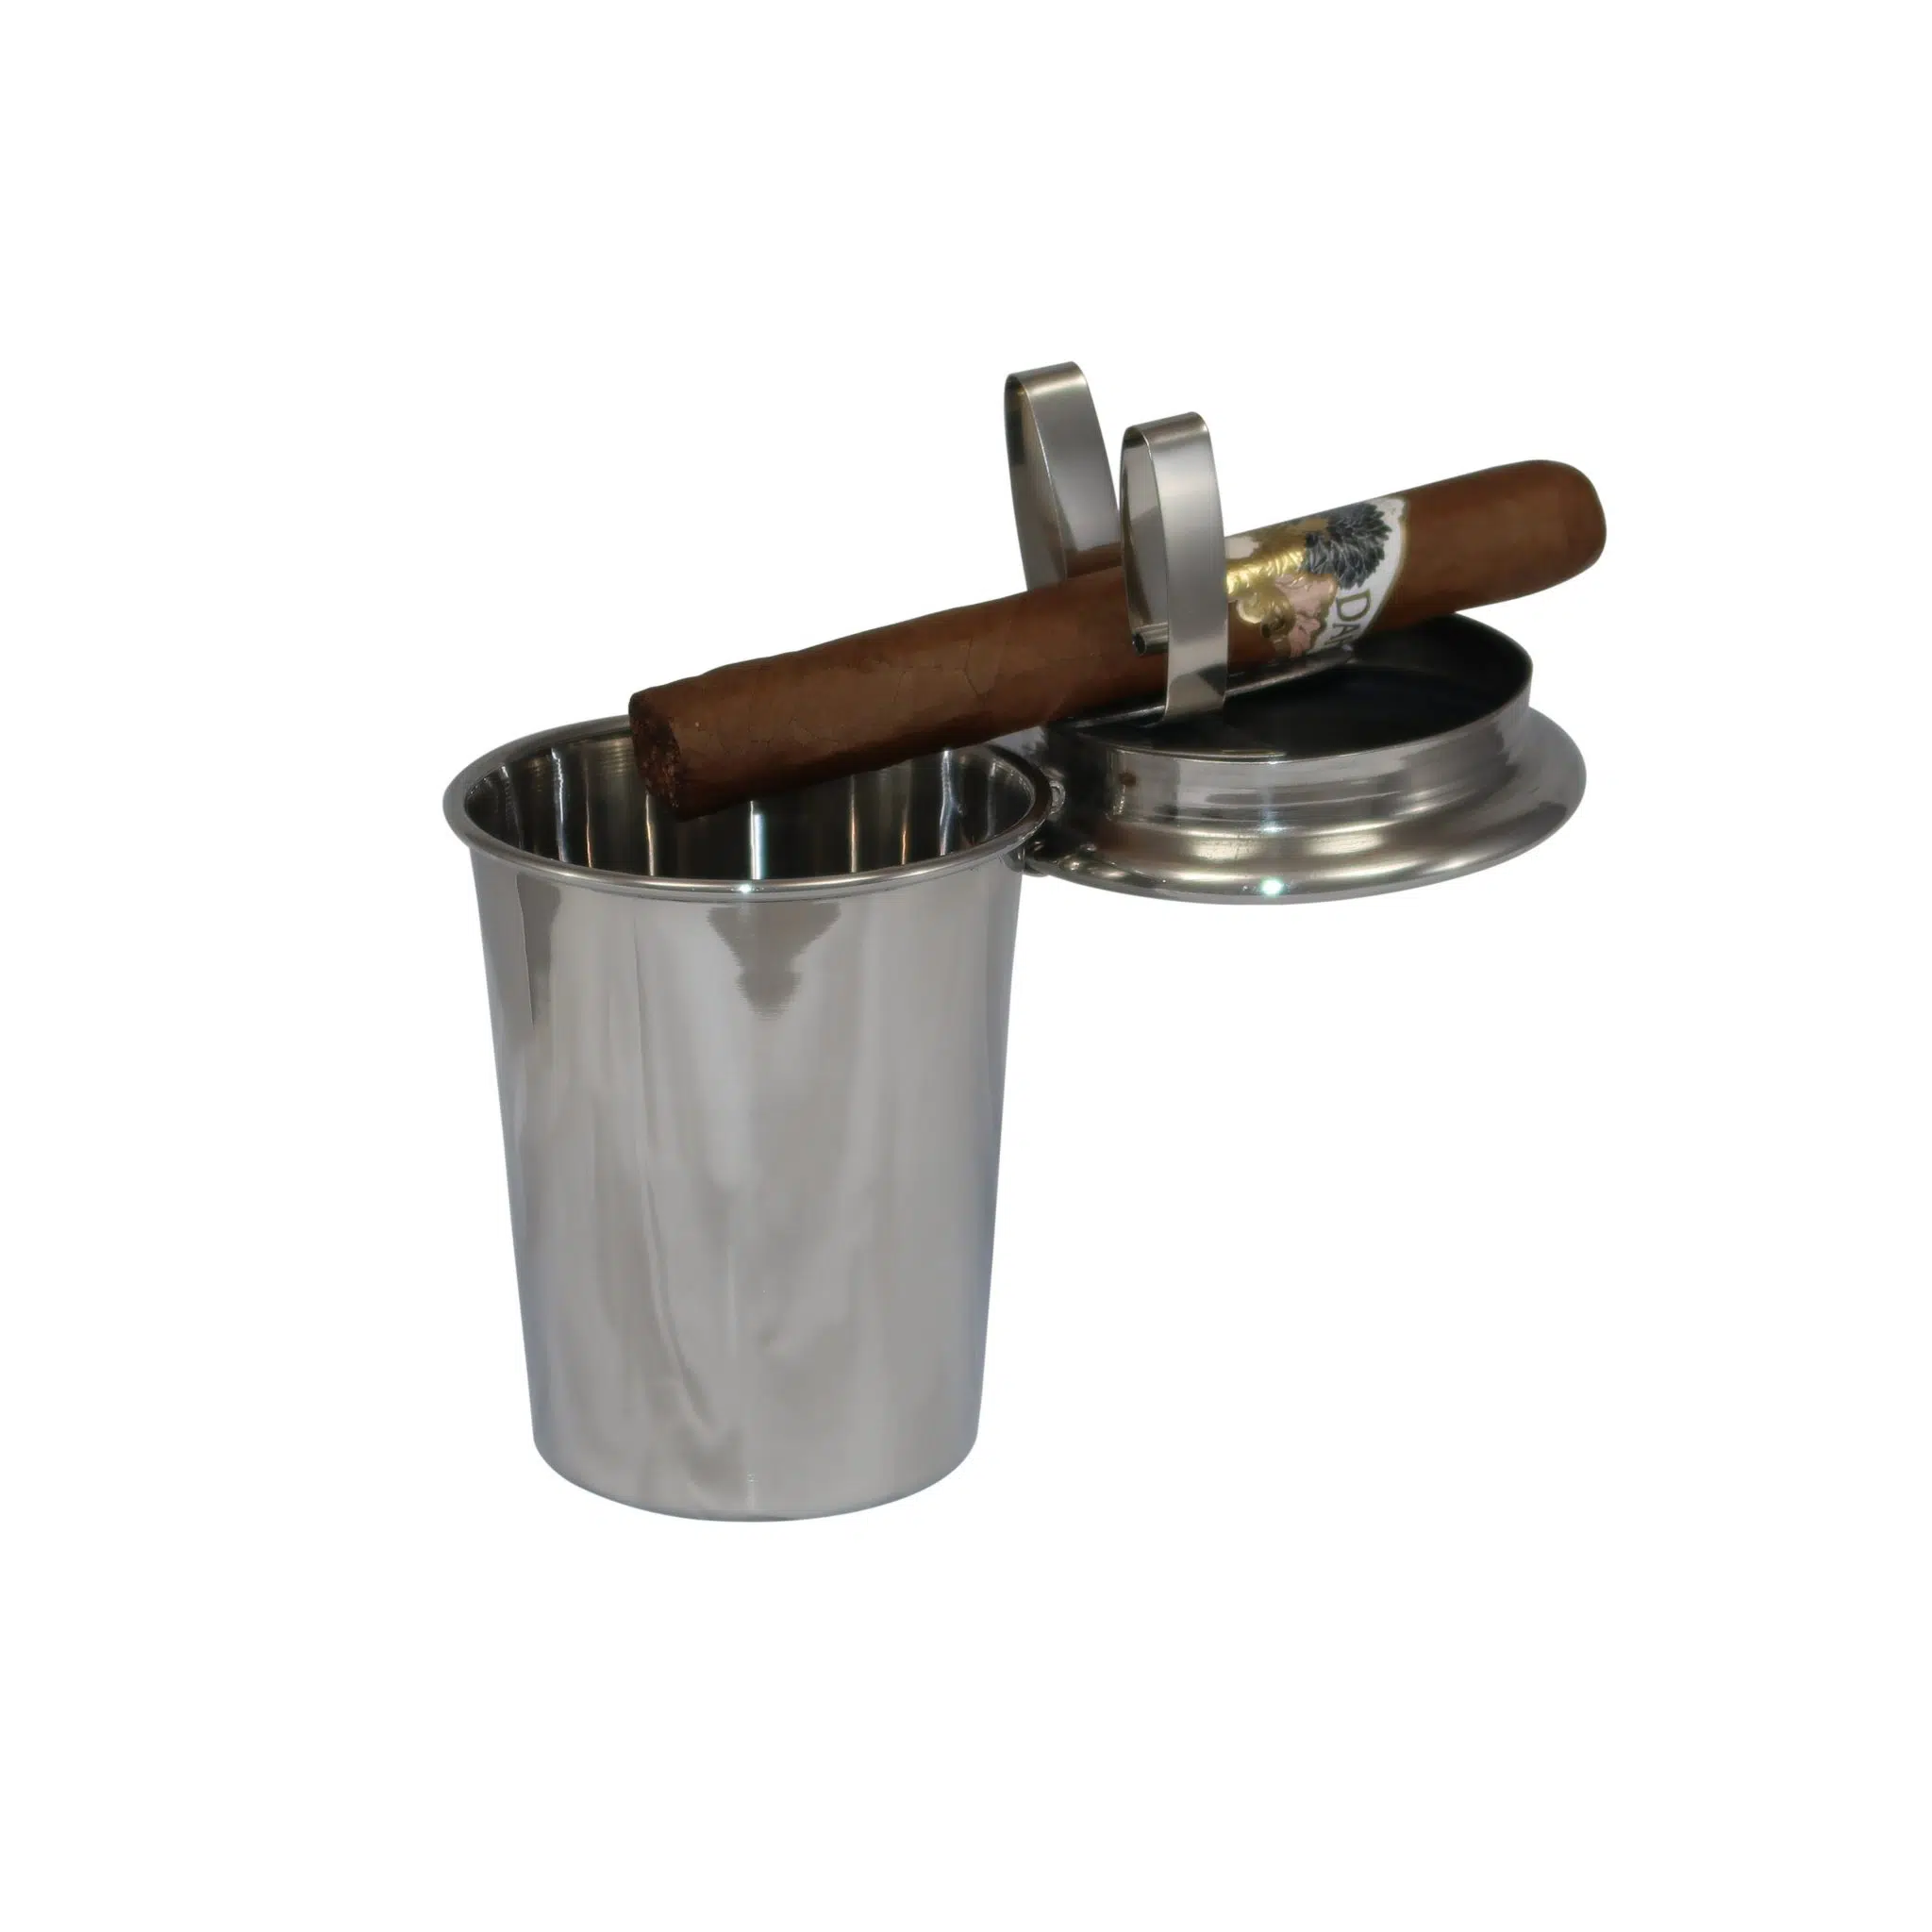 https://stinkycigar.com/wp-content/uploads/2020/11/car-ashtray-w-cigar.jpg.webp